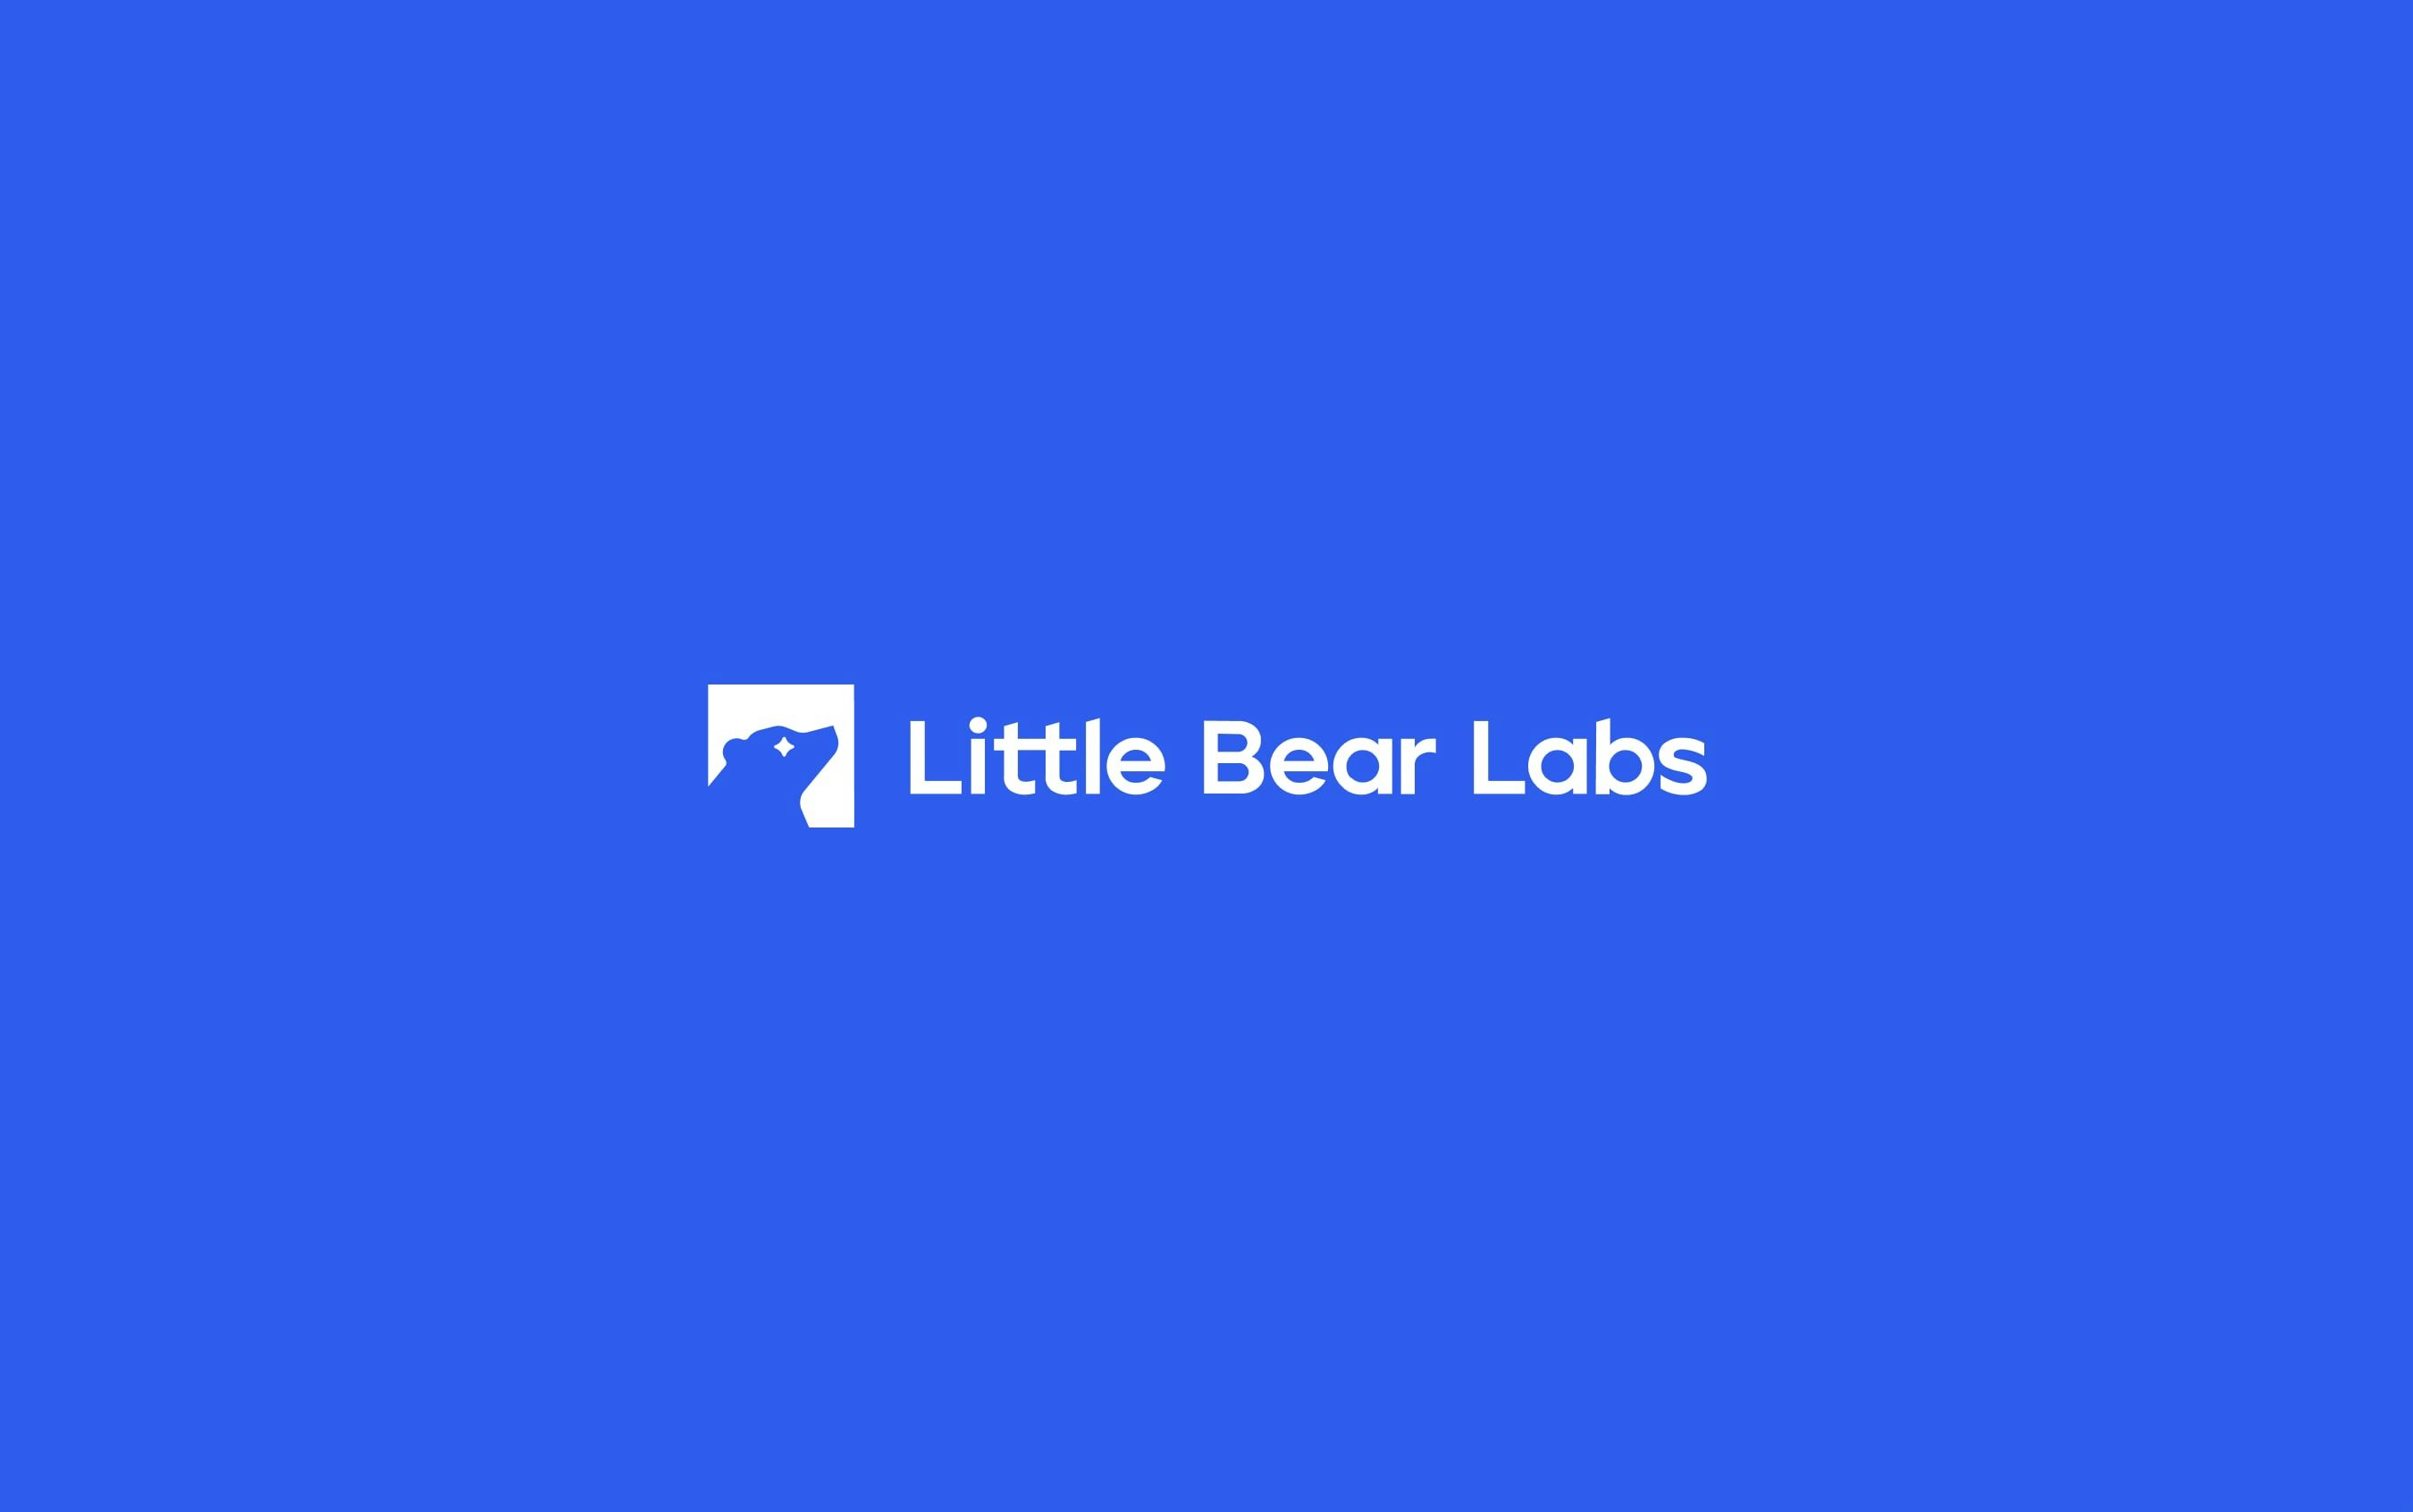 Little Bear Labs branding